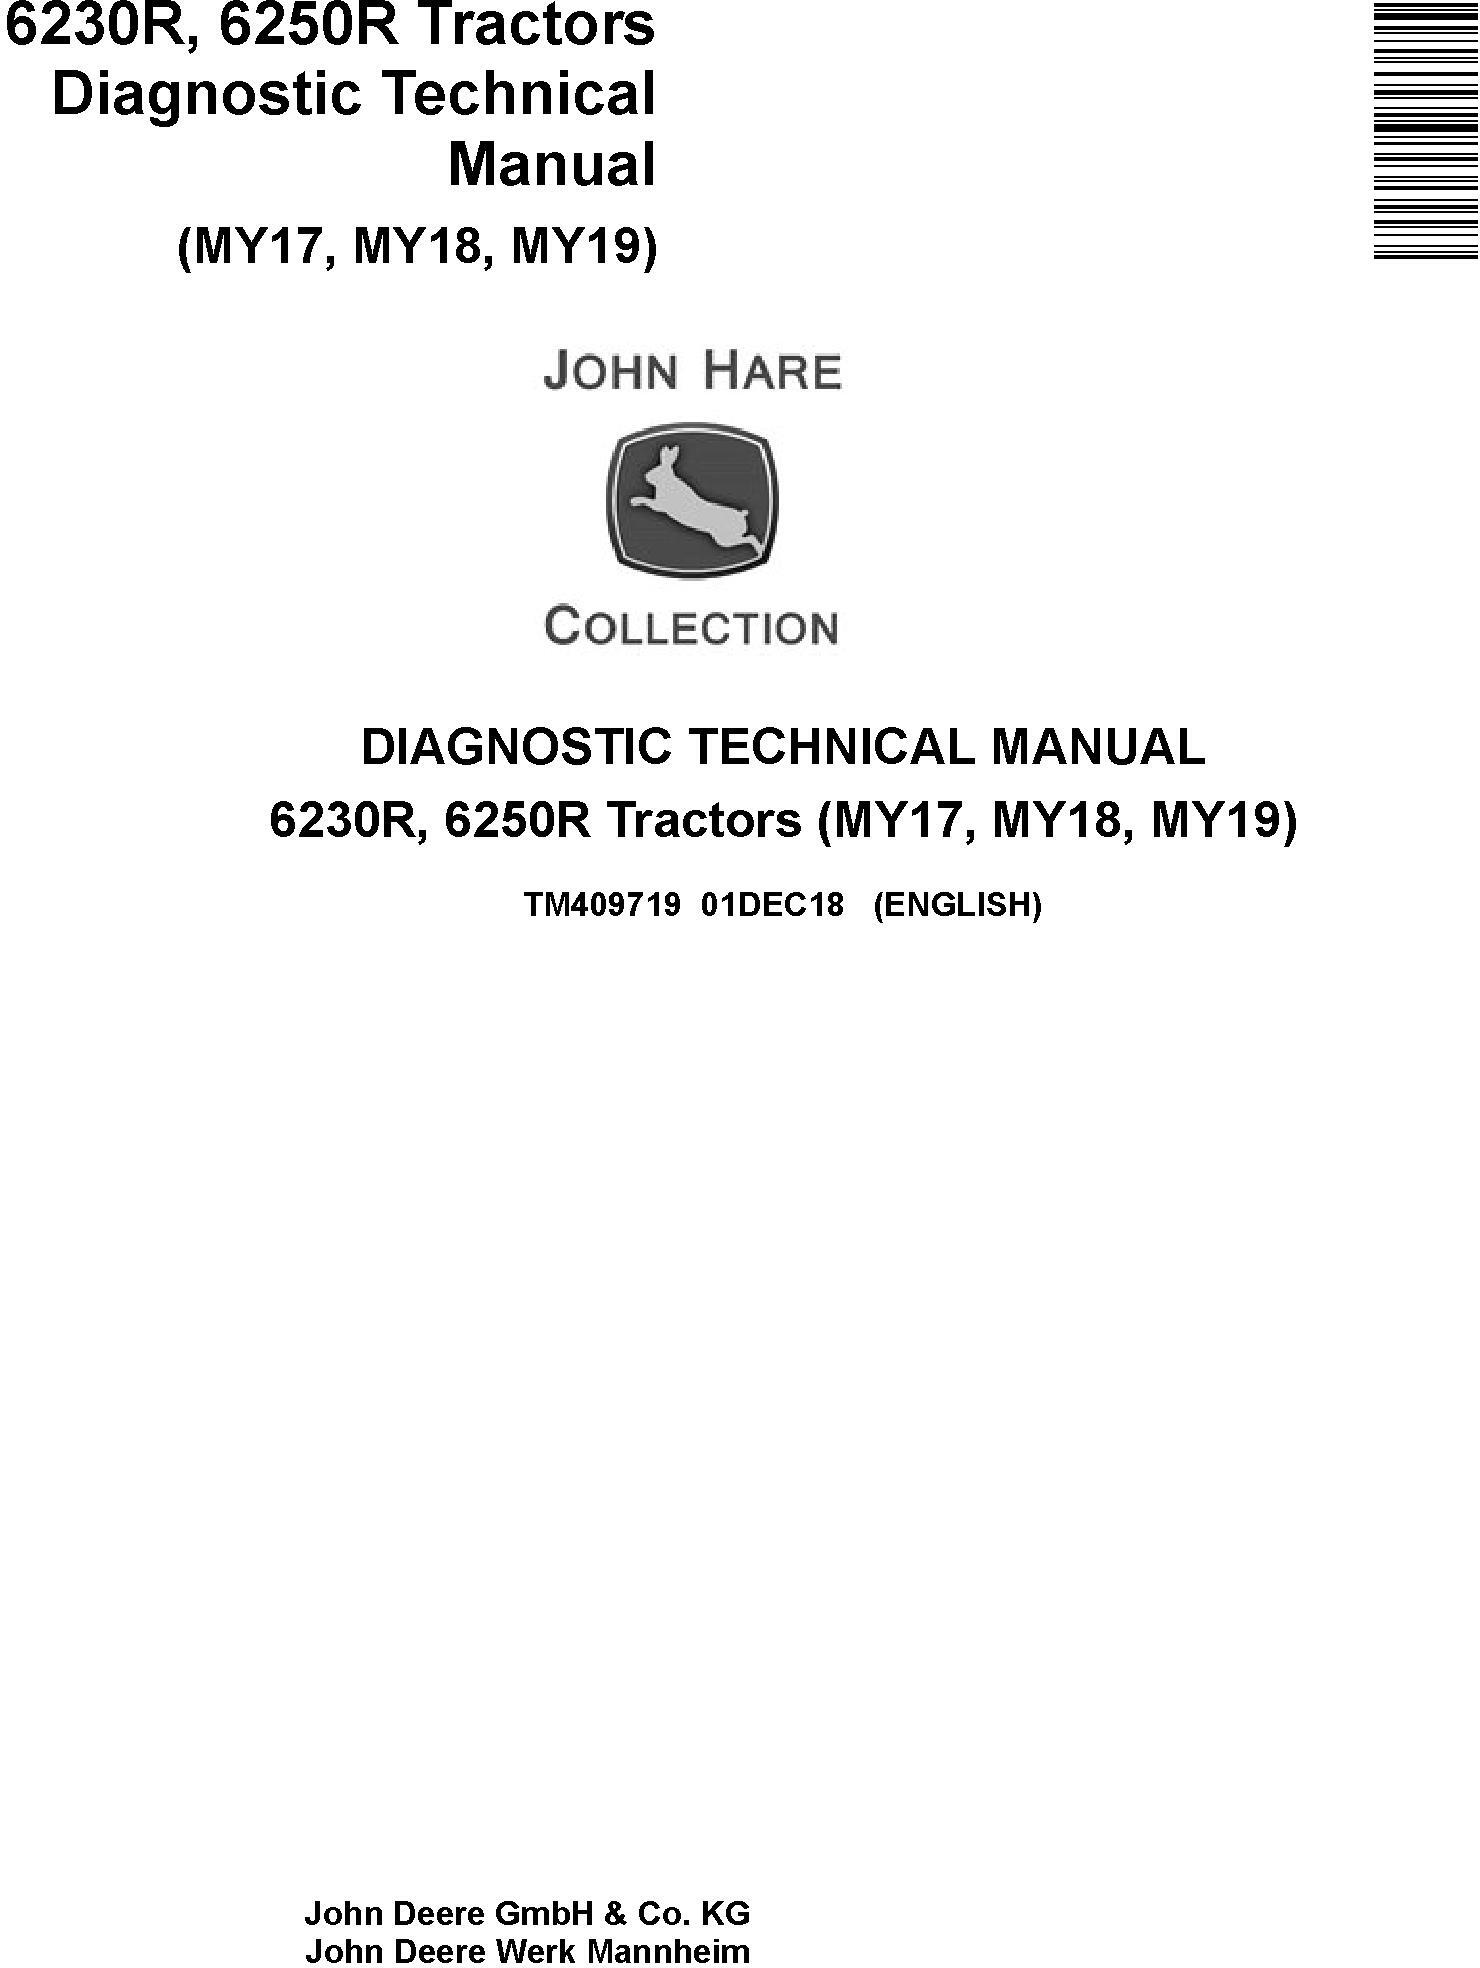 John Deere 6230R 6250R Tractor Diagnostic Technical Manual TM409719